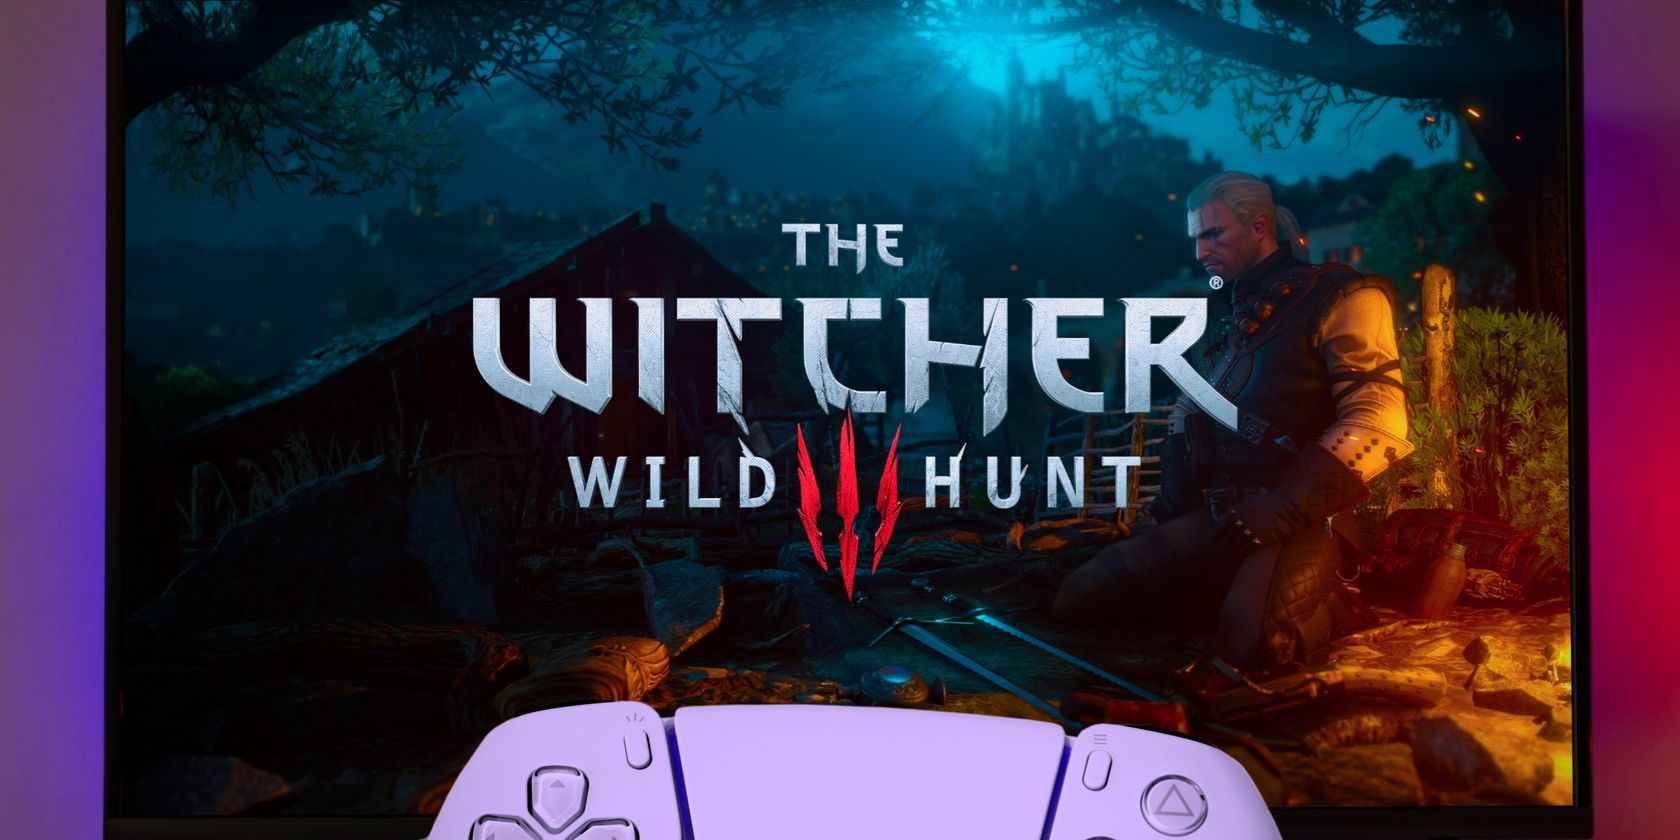 The Witcher 3 Wild Hunt's logo